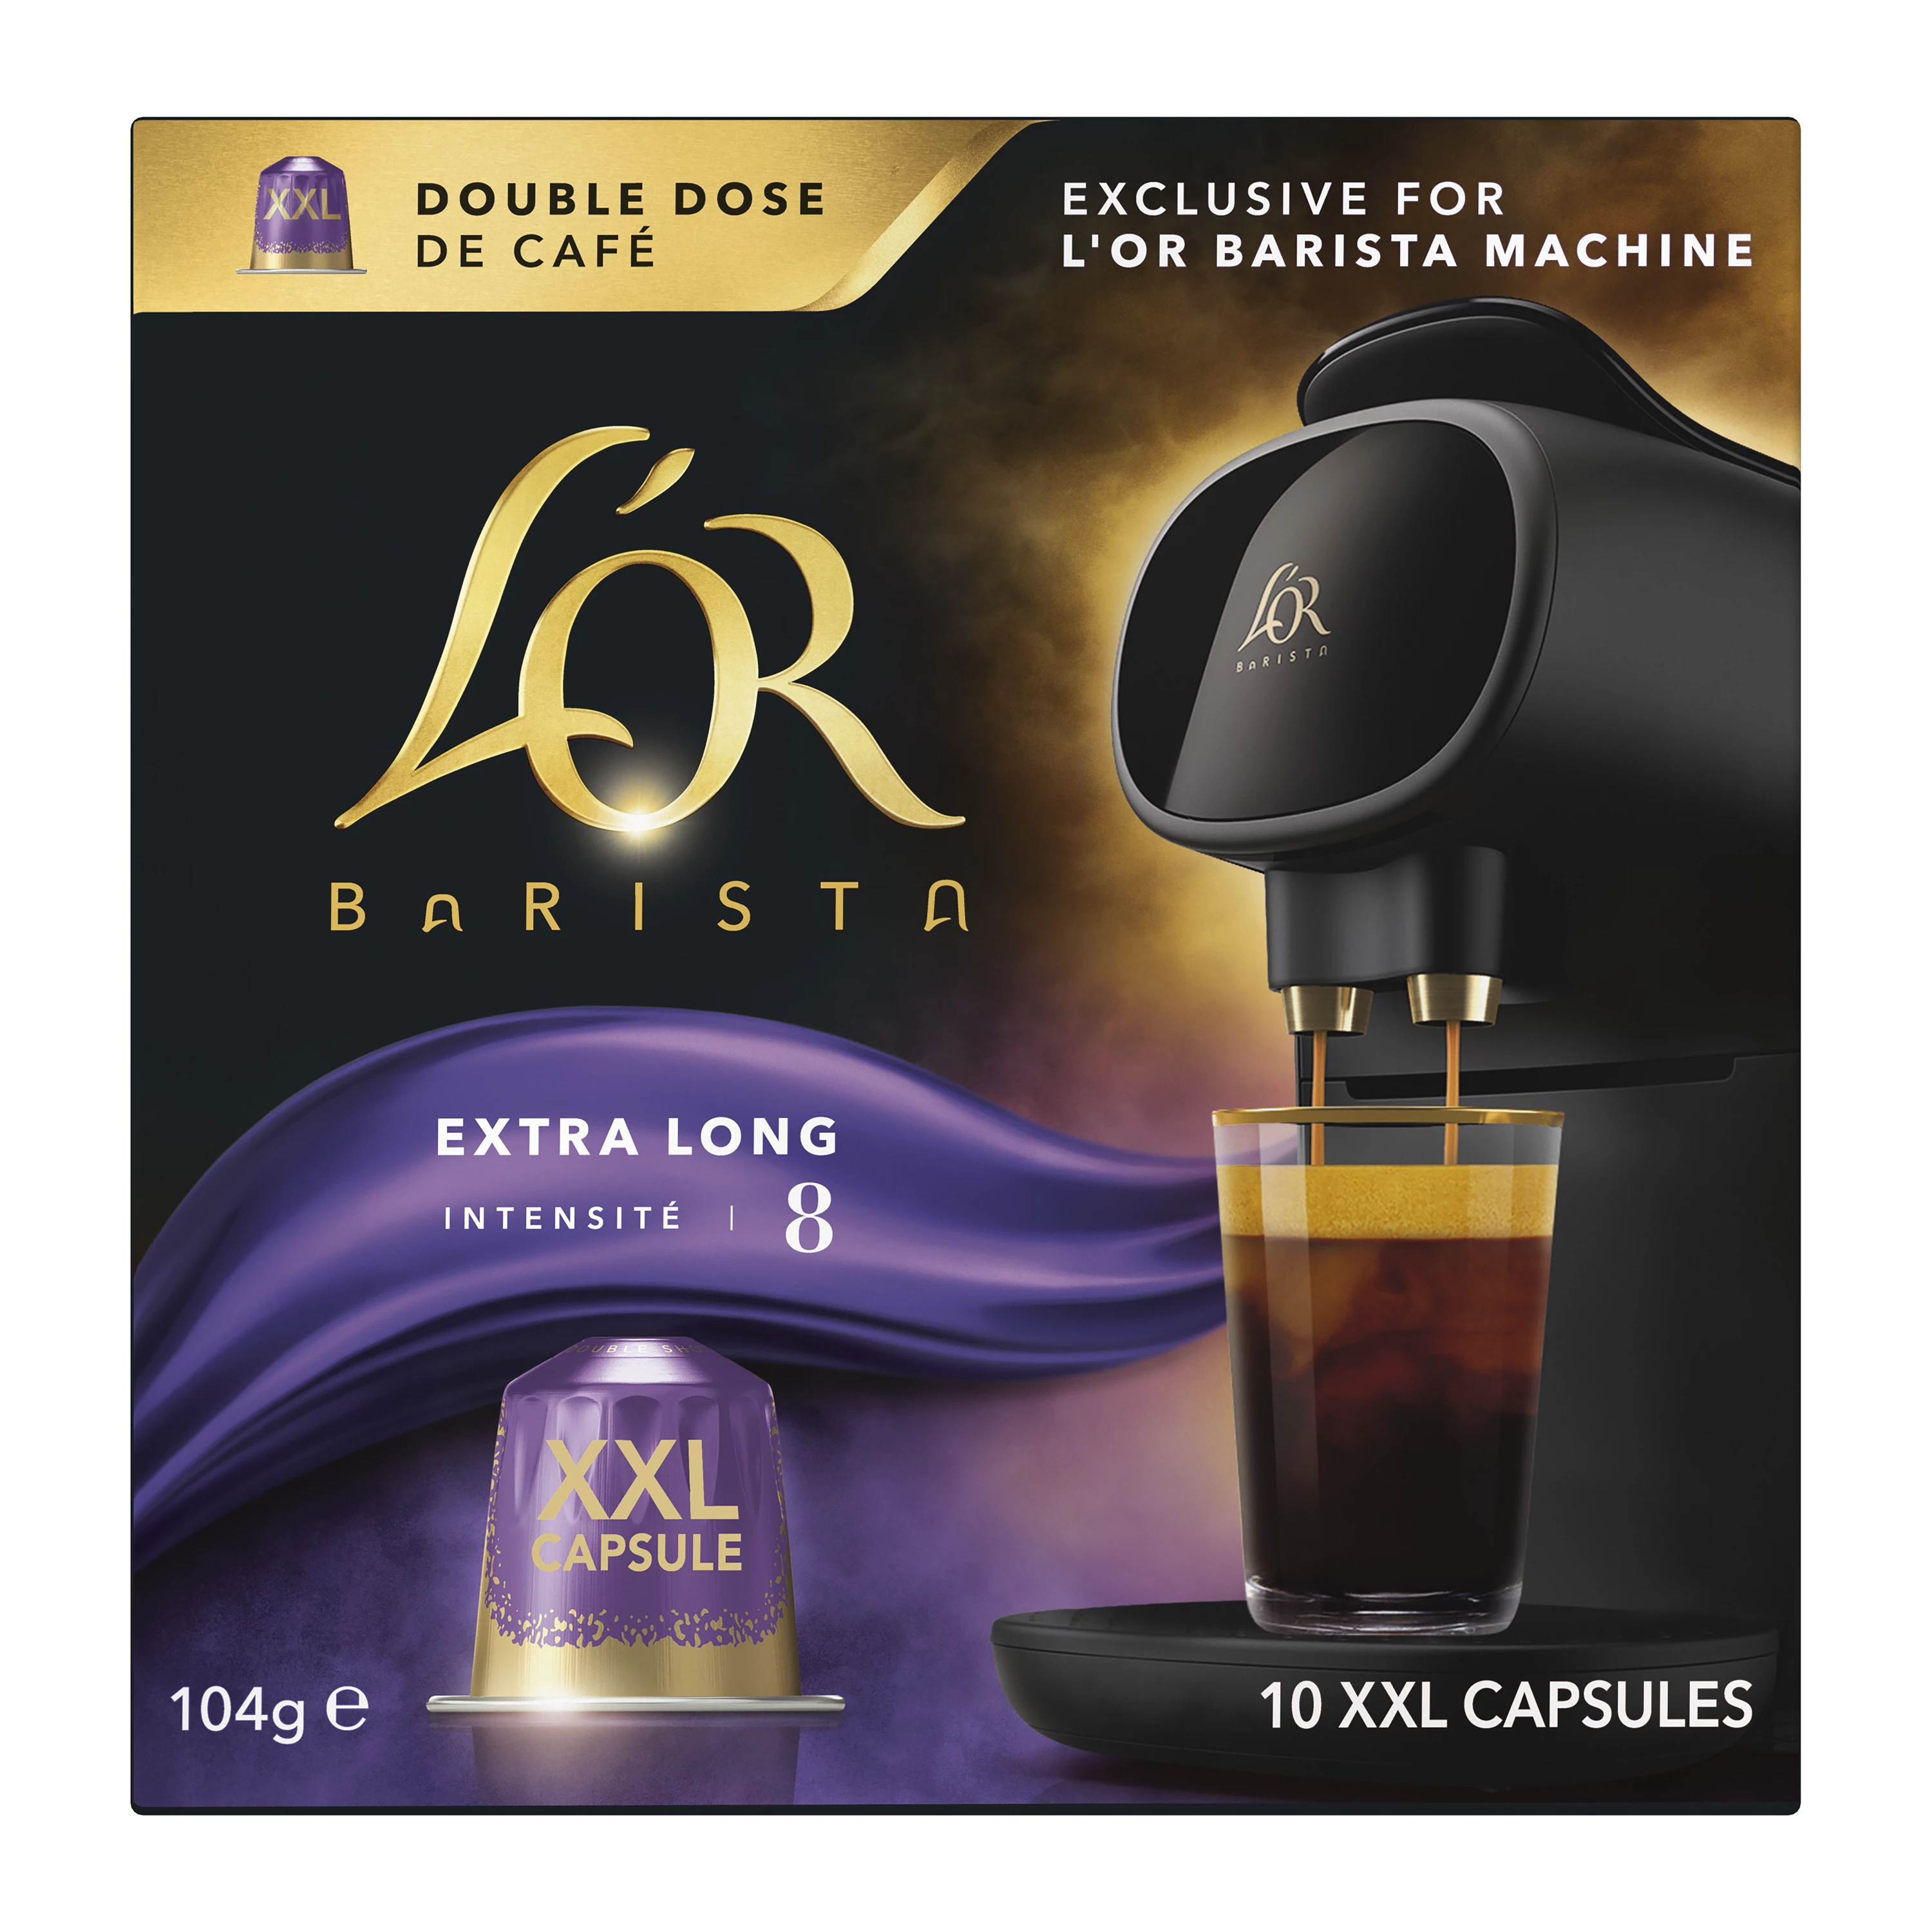 Viên nang Café Double Lungo Profondo pour Machine l'Or Barista; x10; 104g - L'OR